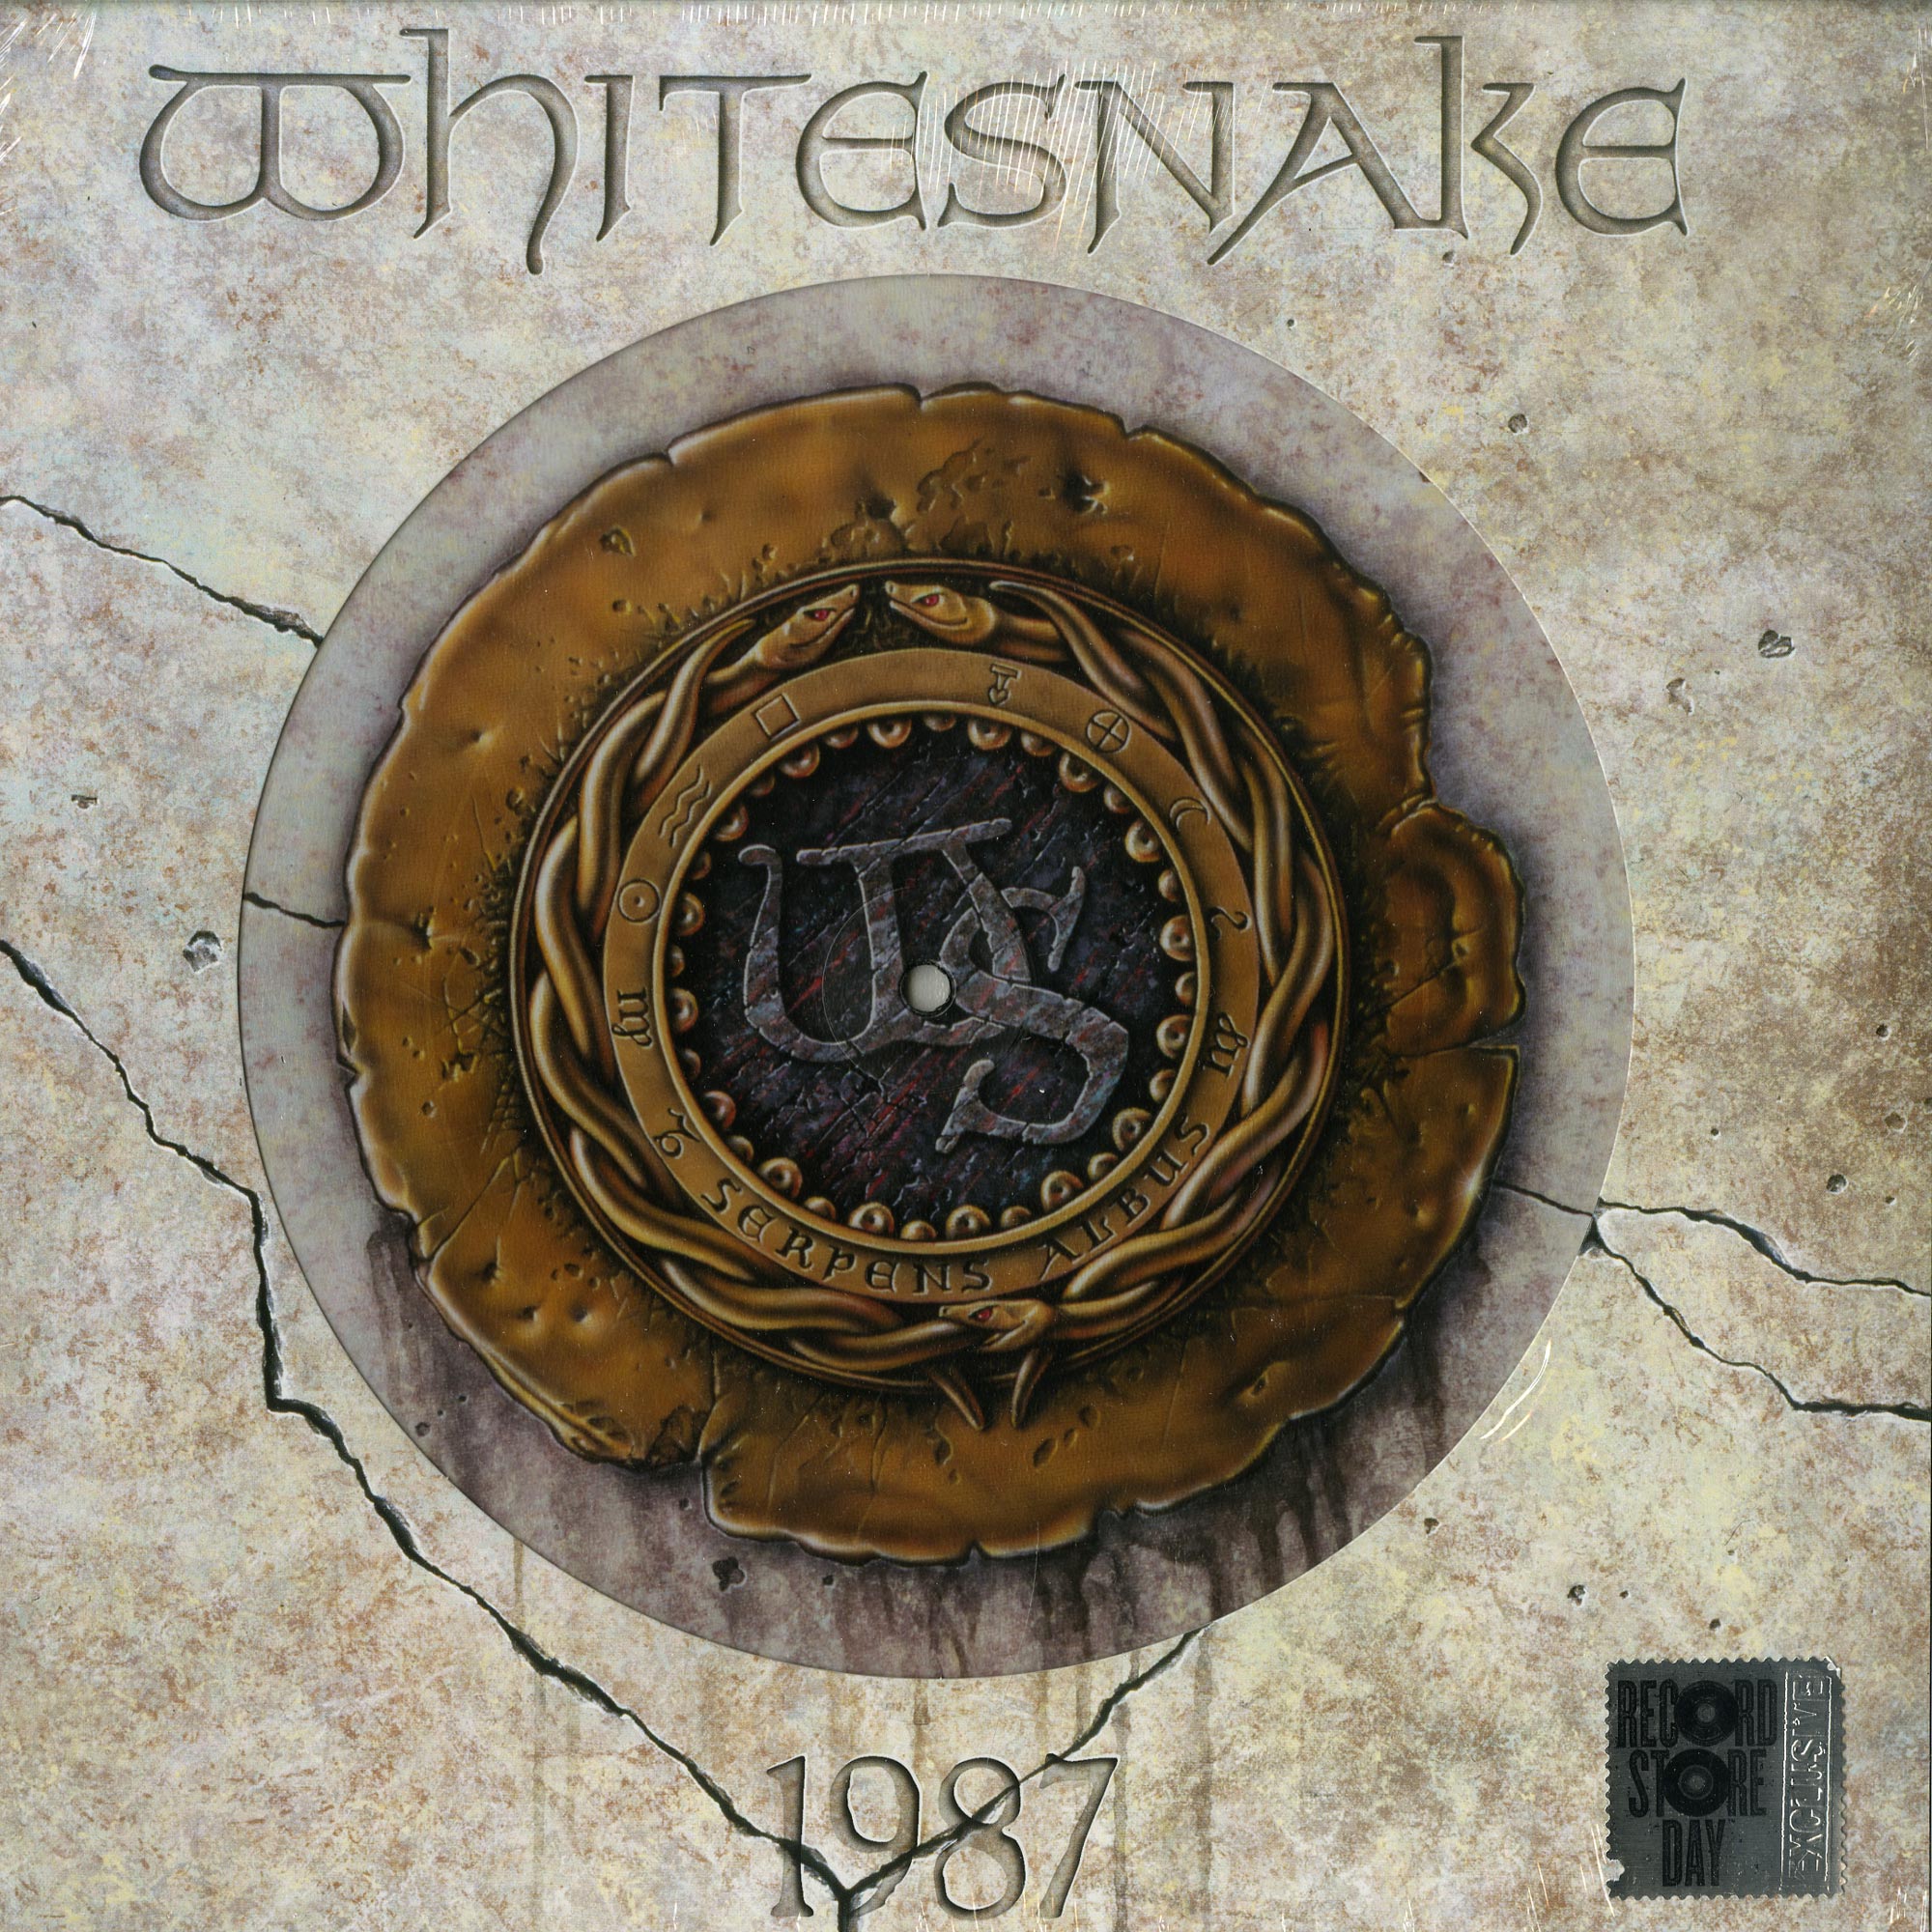 Whitesnake 1987 30th anniversary edition retro 80s